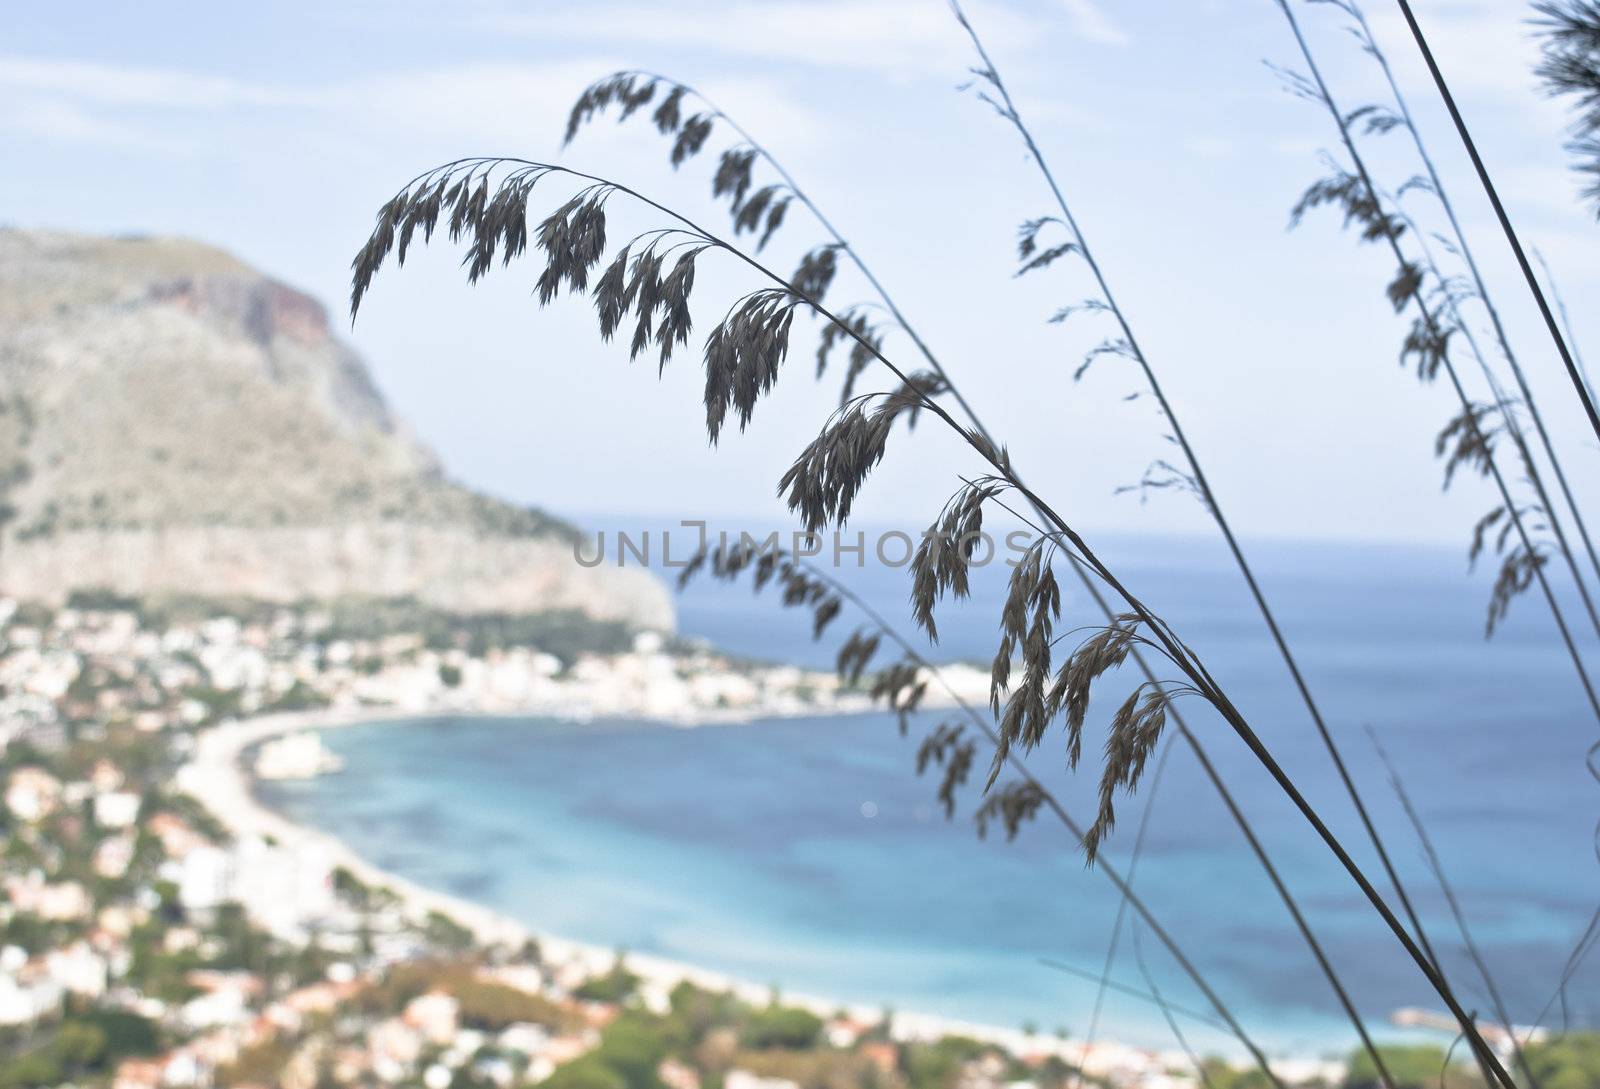 Panoramic view of the mondello's gulf. Palermo- Sicily